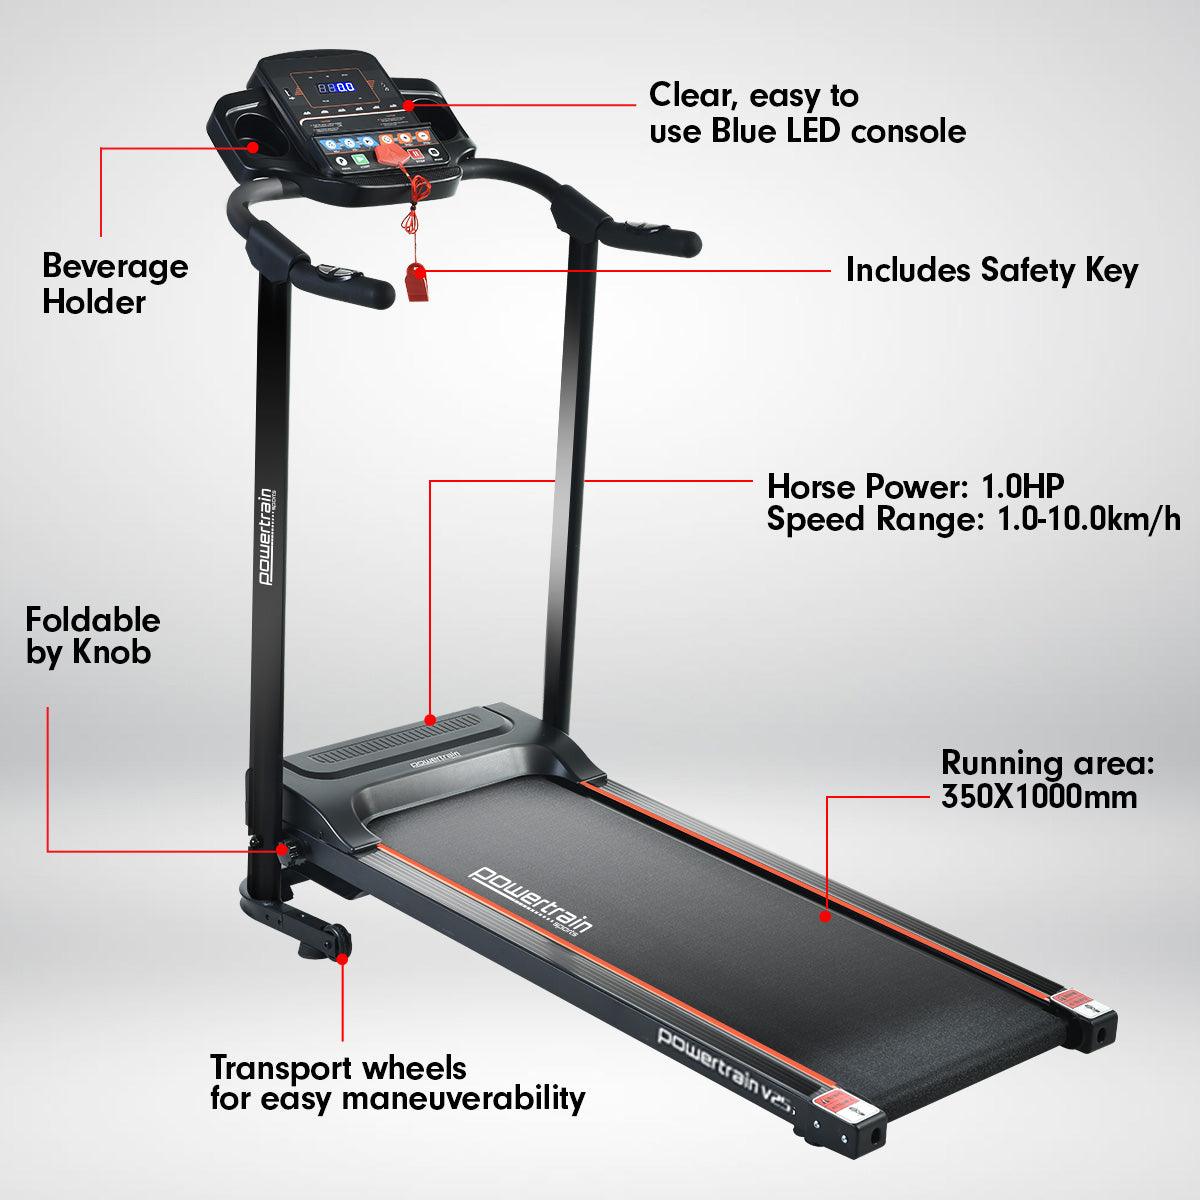 Powertrain V25 Foldable Treadmill Home Gym Cardio Walk Machine Products On Sale Australia | Sports & Fitness > Fitness Accessories Category